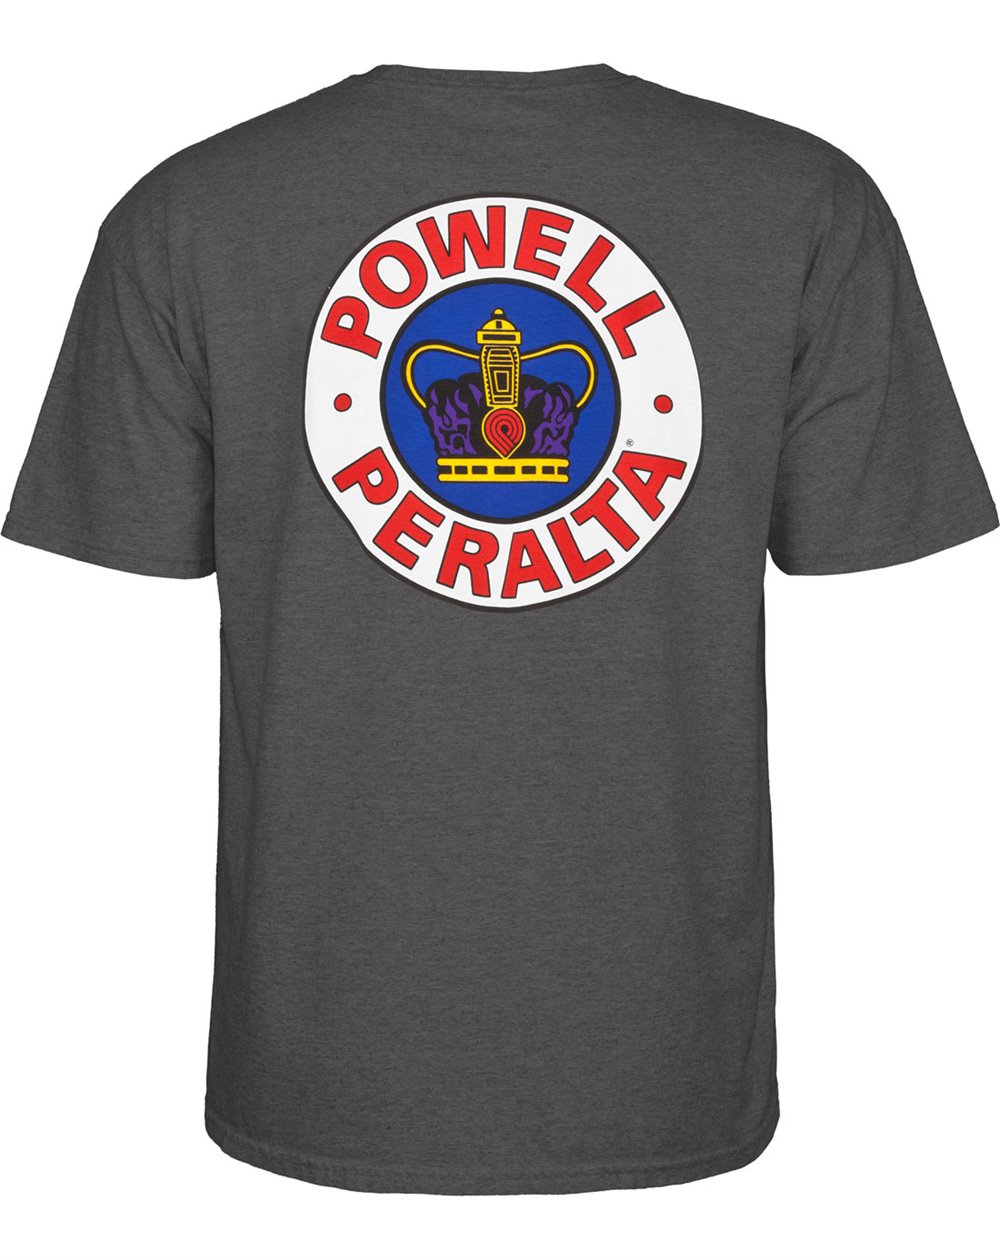 Powell Peralta Men's T-Shirt Supreme Charcoal Heather